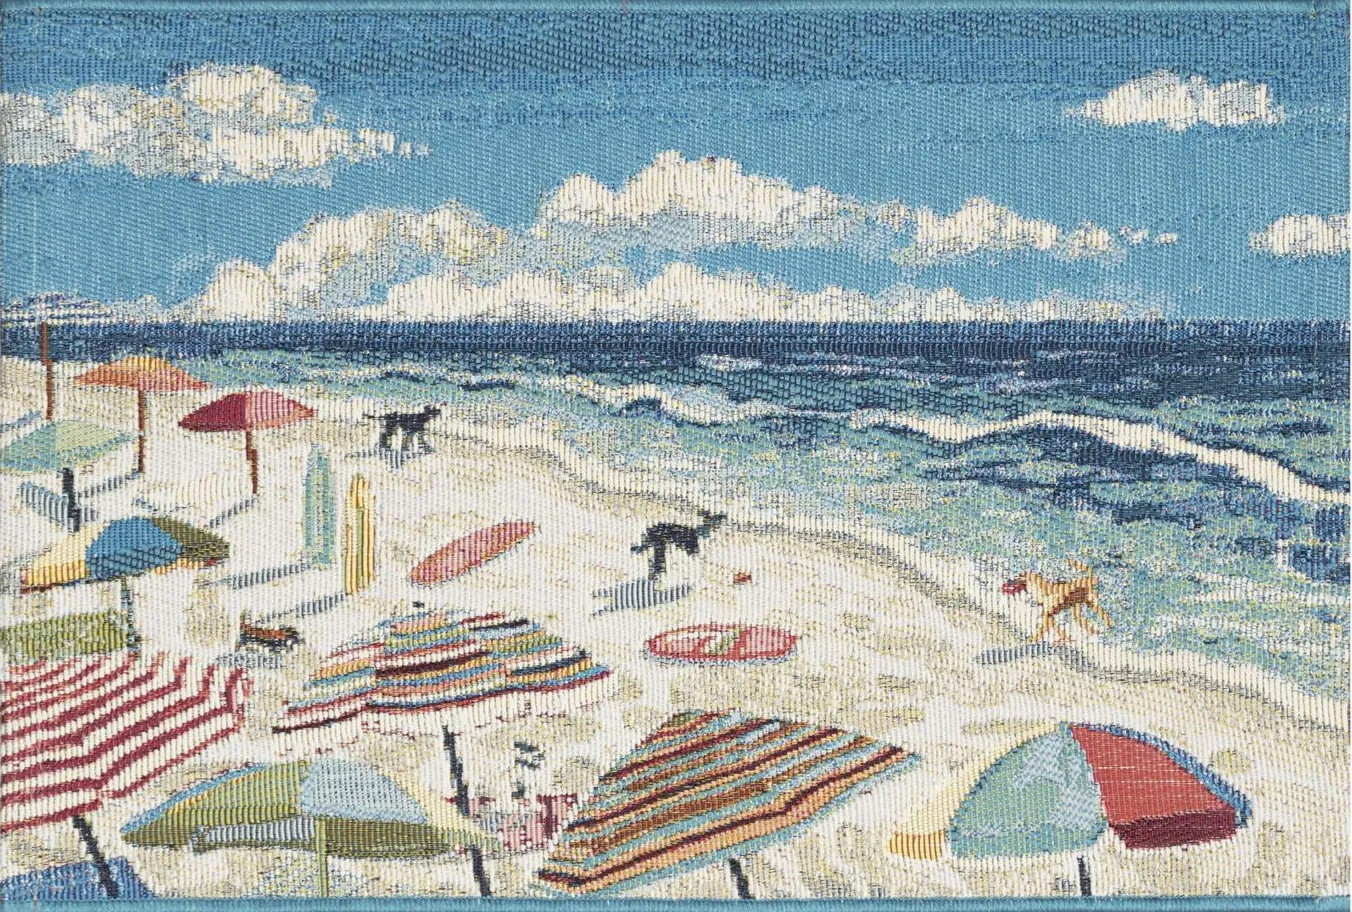 Esencia Dog Beach Mat in Ocean by Trans-Ocean Import Co Inc